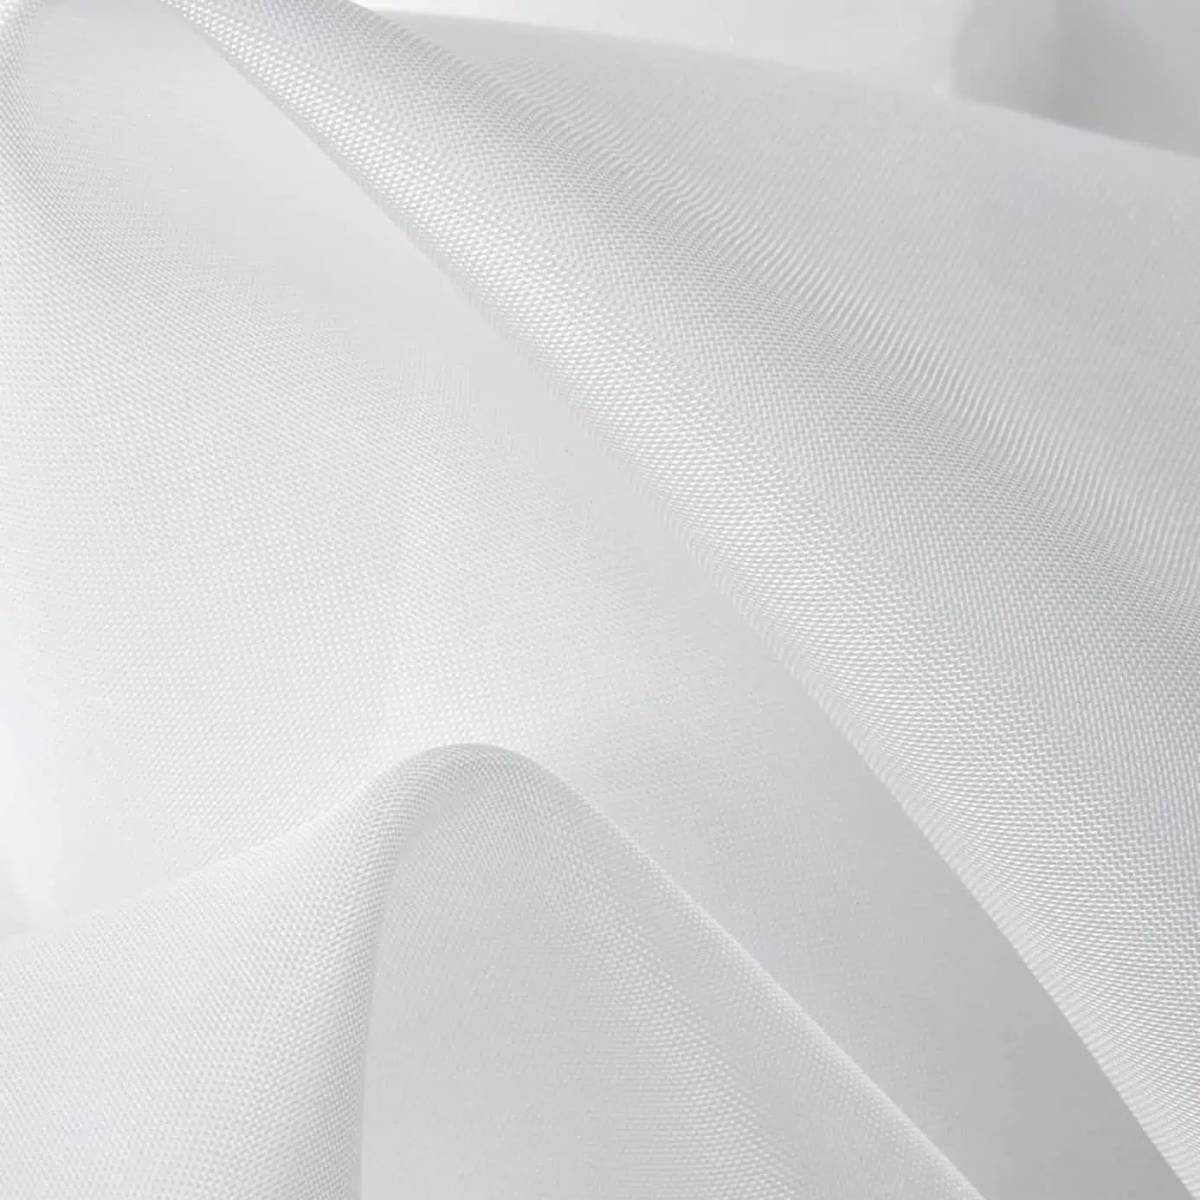 FR Slub Voile 9002 - White (9002-White) - OUTLET SALES All Fabric ...